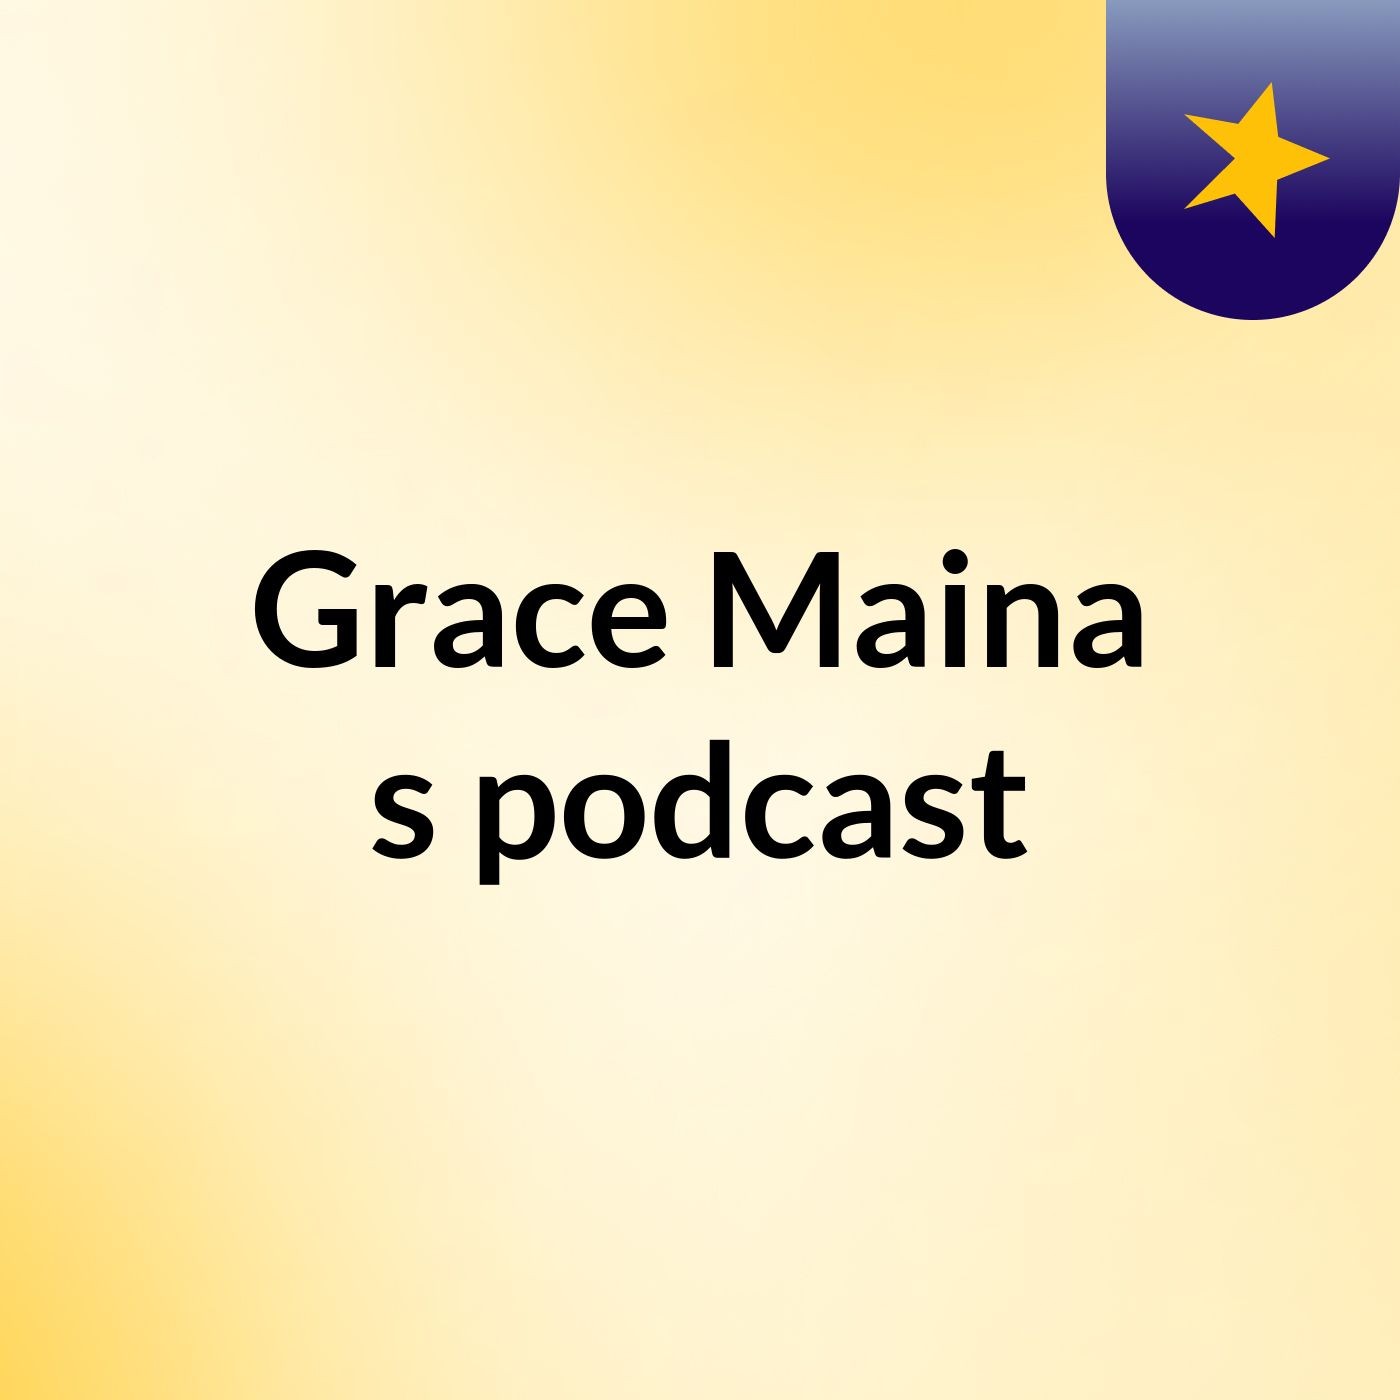 Grace Maina's podcast